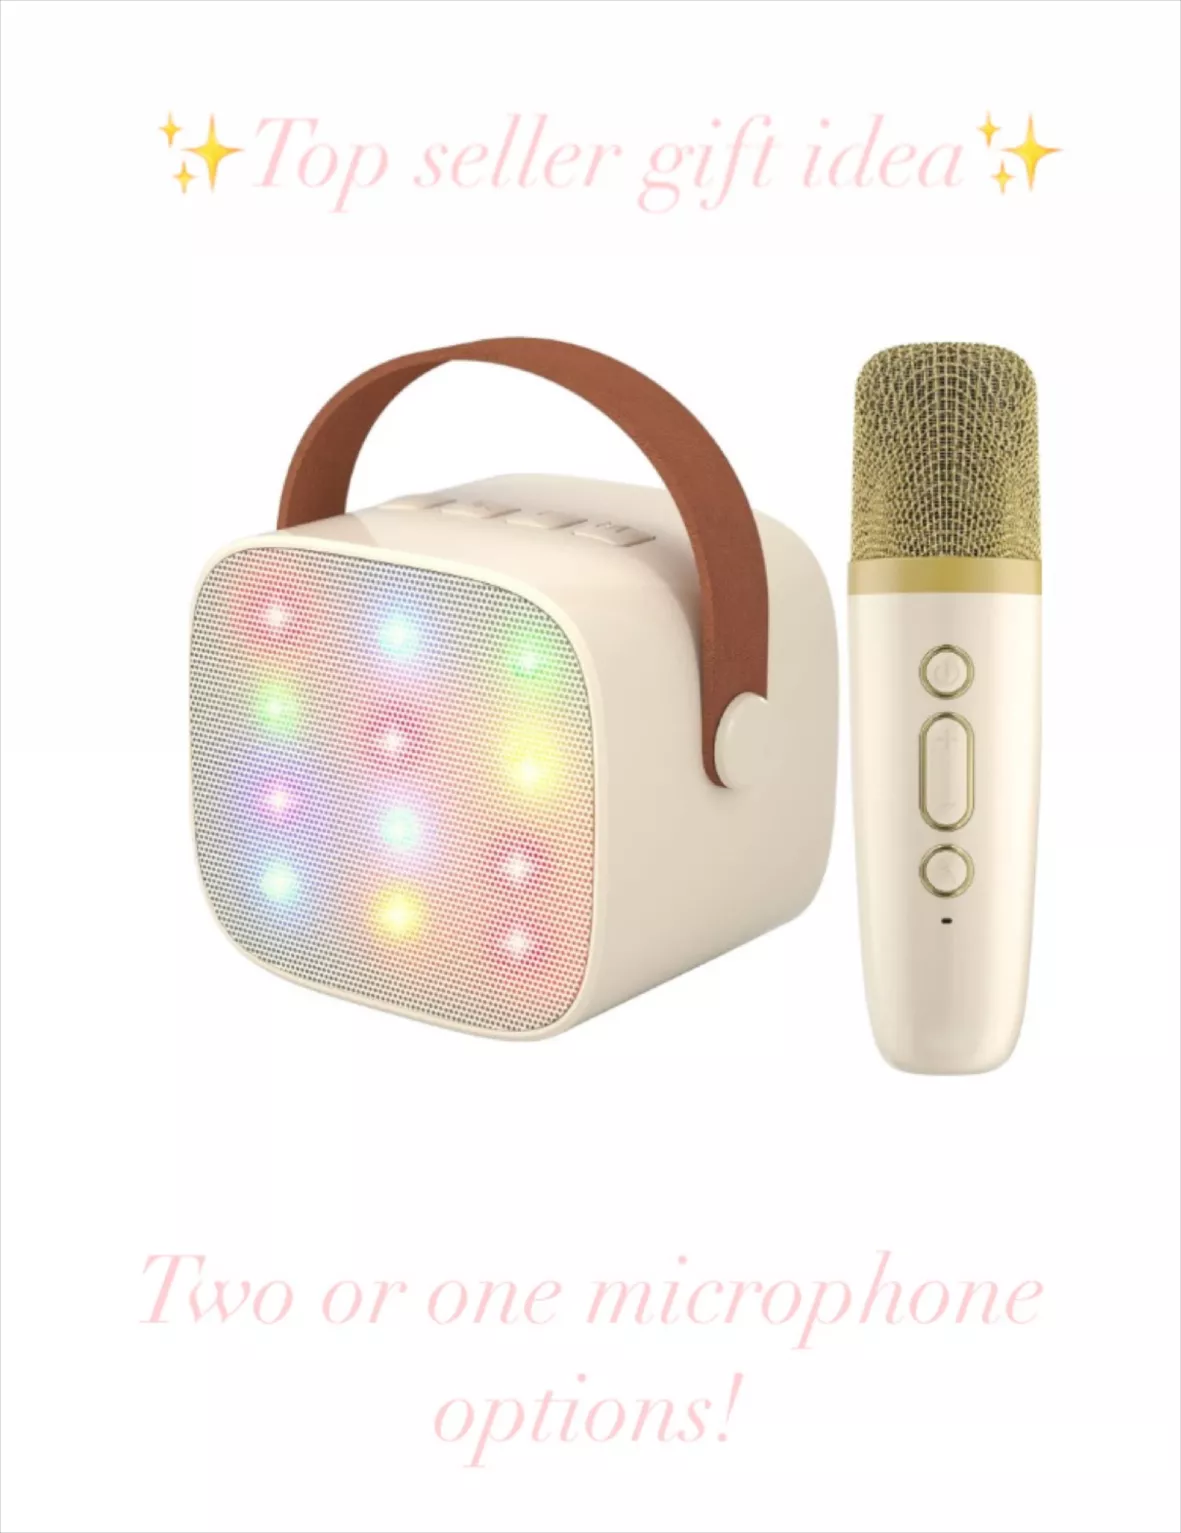 YLL Kids Karaoke Machine Portable Bluetooth Speaker with Wireless